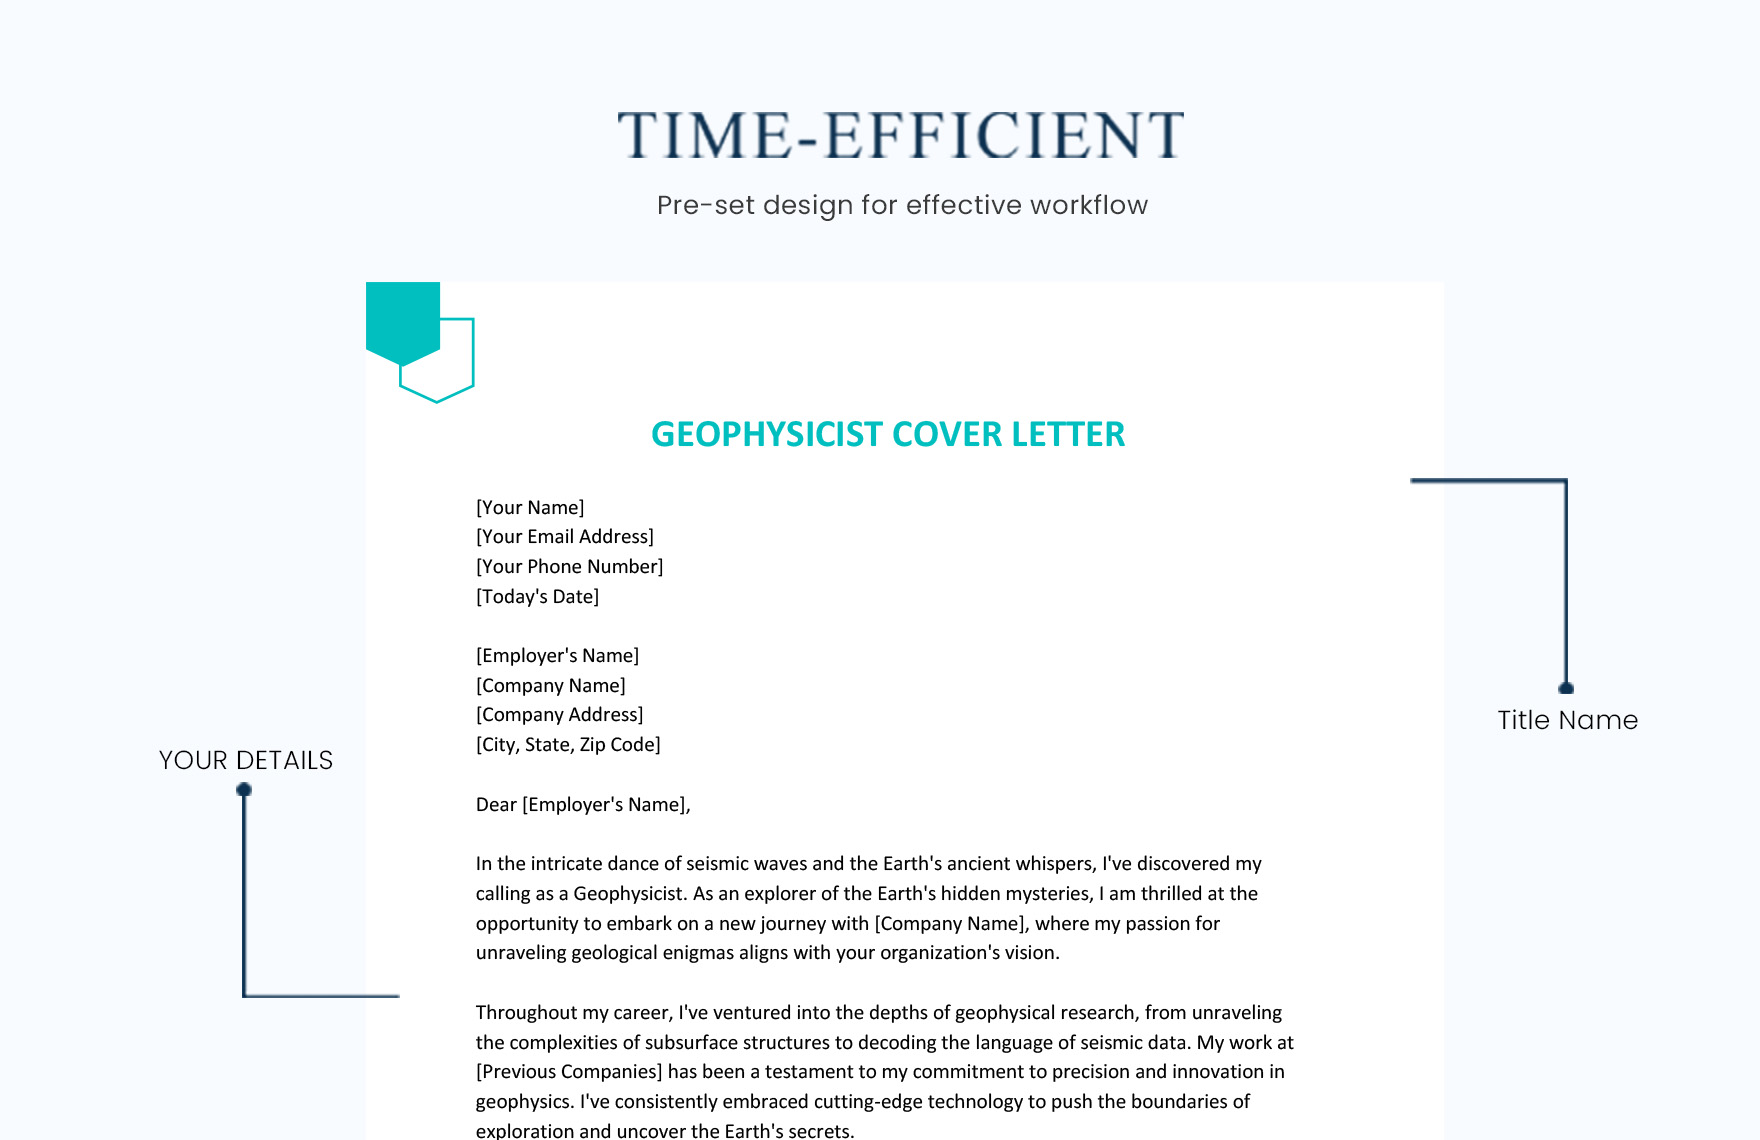 Geophysicist Cover Letter